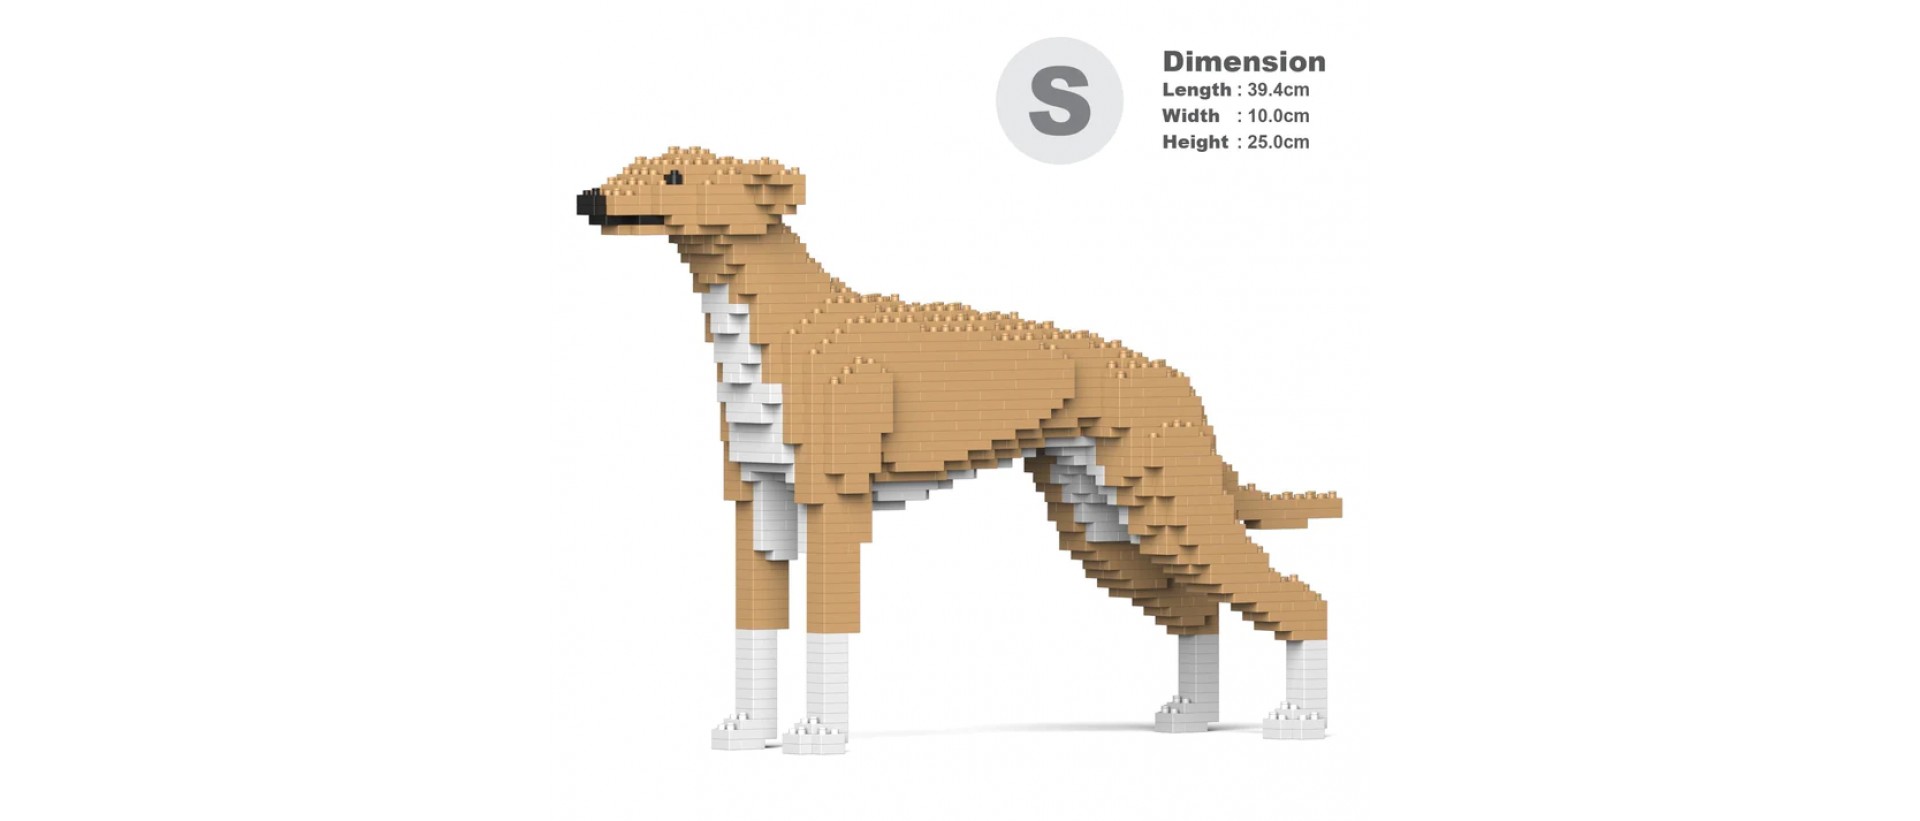 Greyhound - 3D Jekca constructor ST19PT45-M01